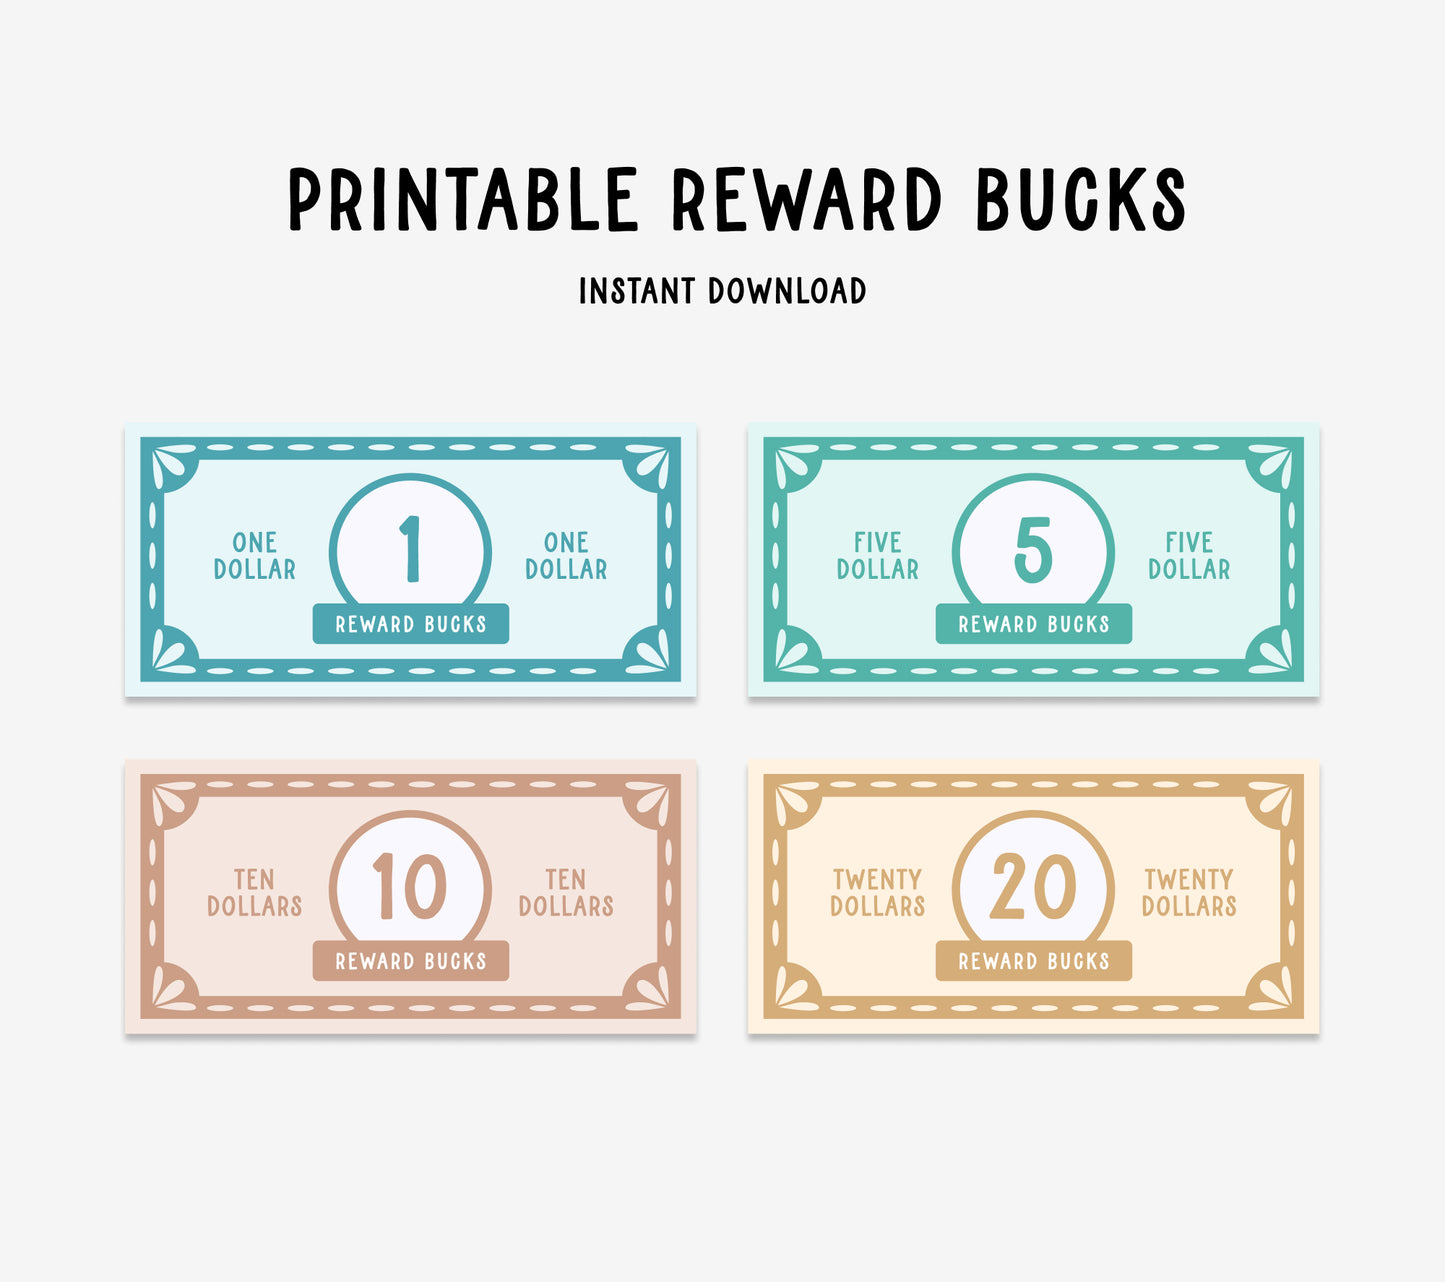 Printable Reward Bucks and Earn/Spend sheet